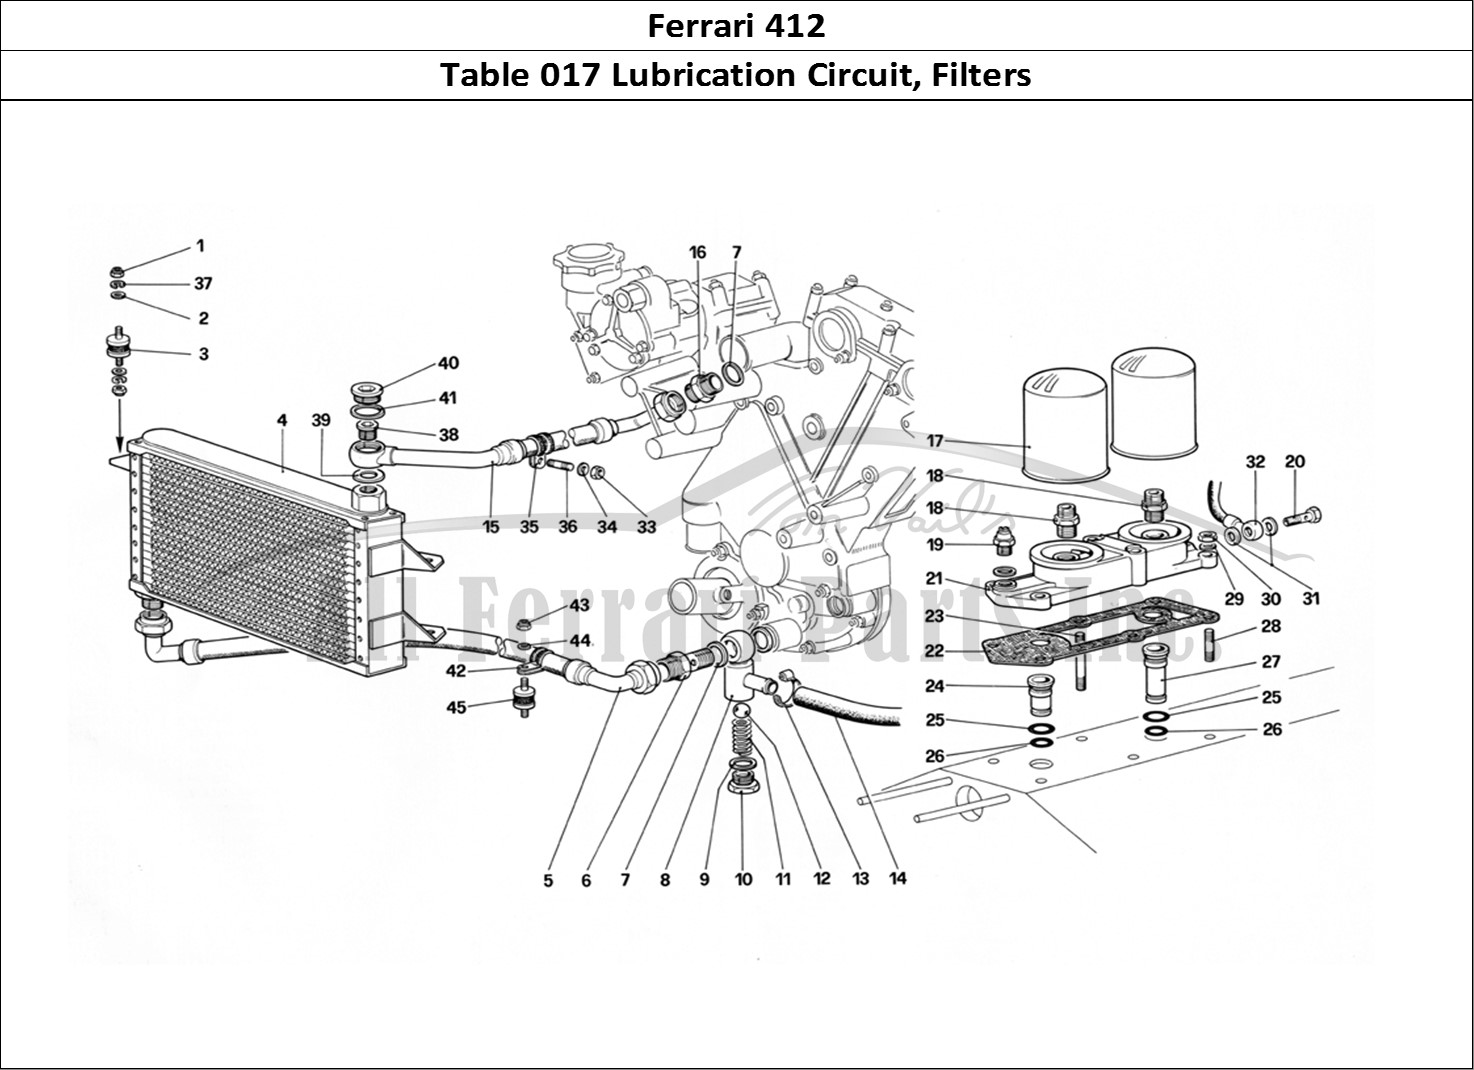 Ferrari Parts Ferrari 412 (Mechanical) Page 017 Lubrication Circuit and F